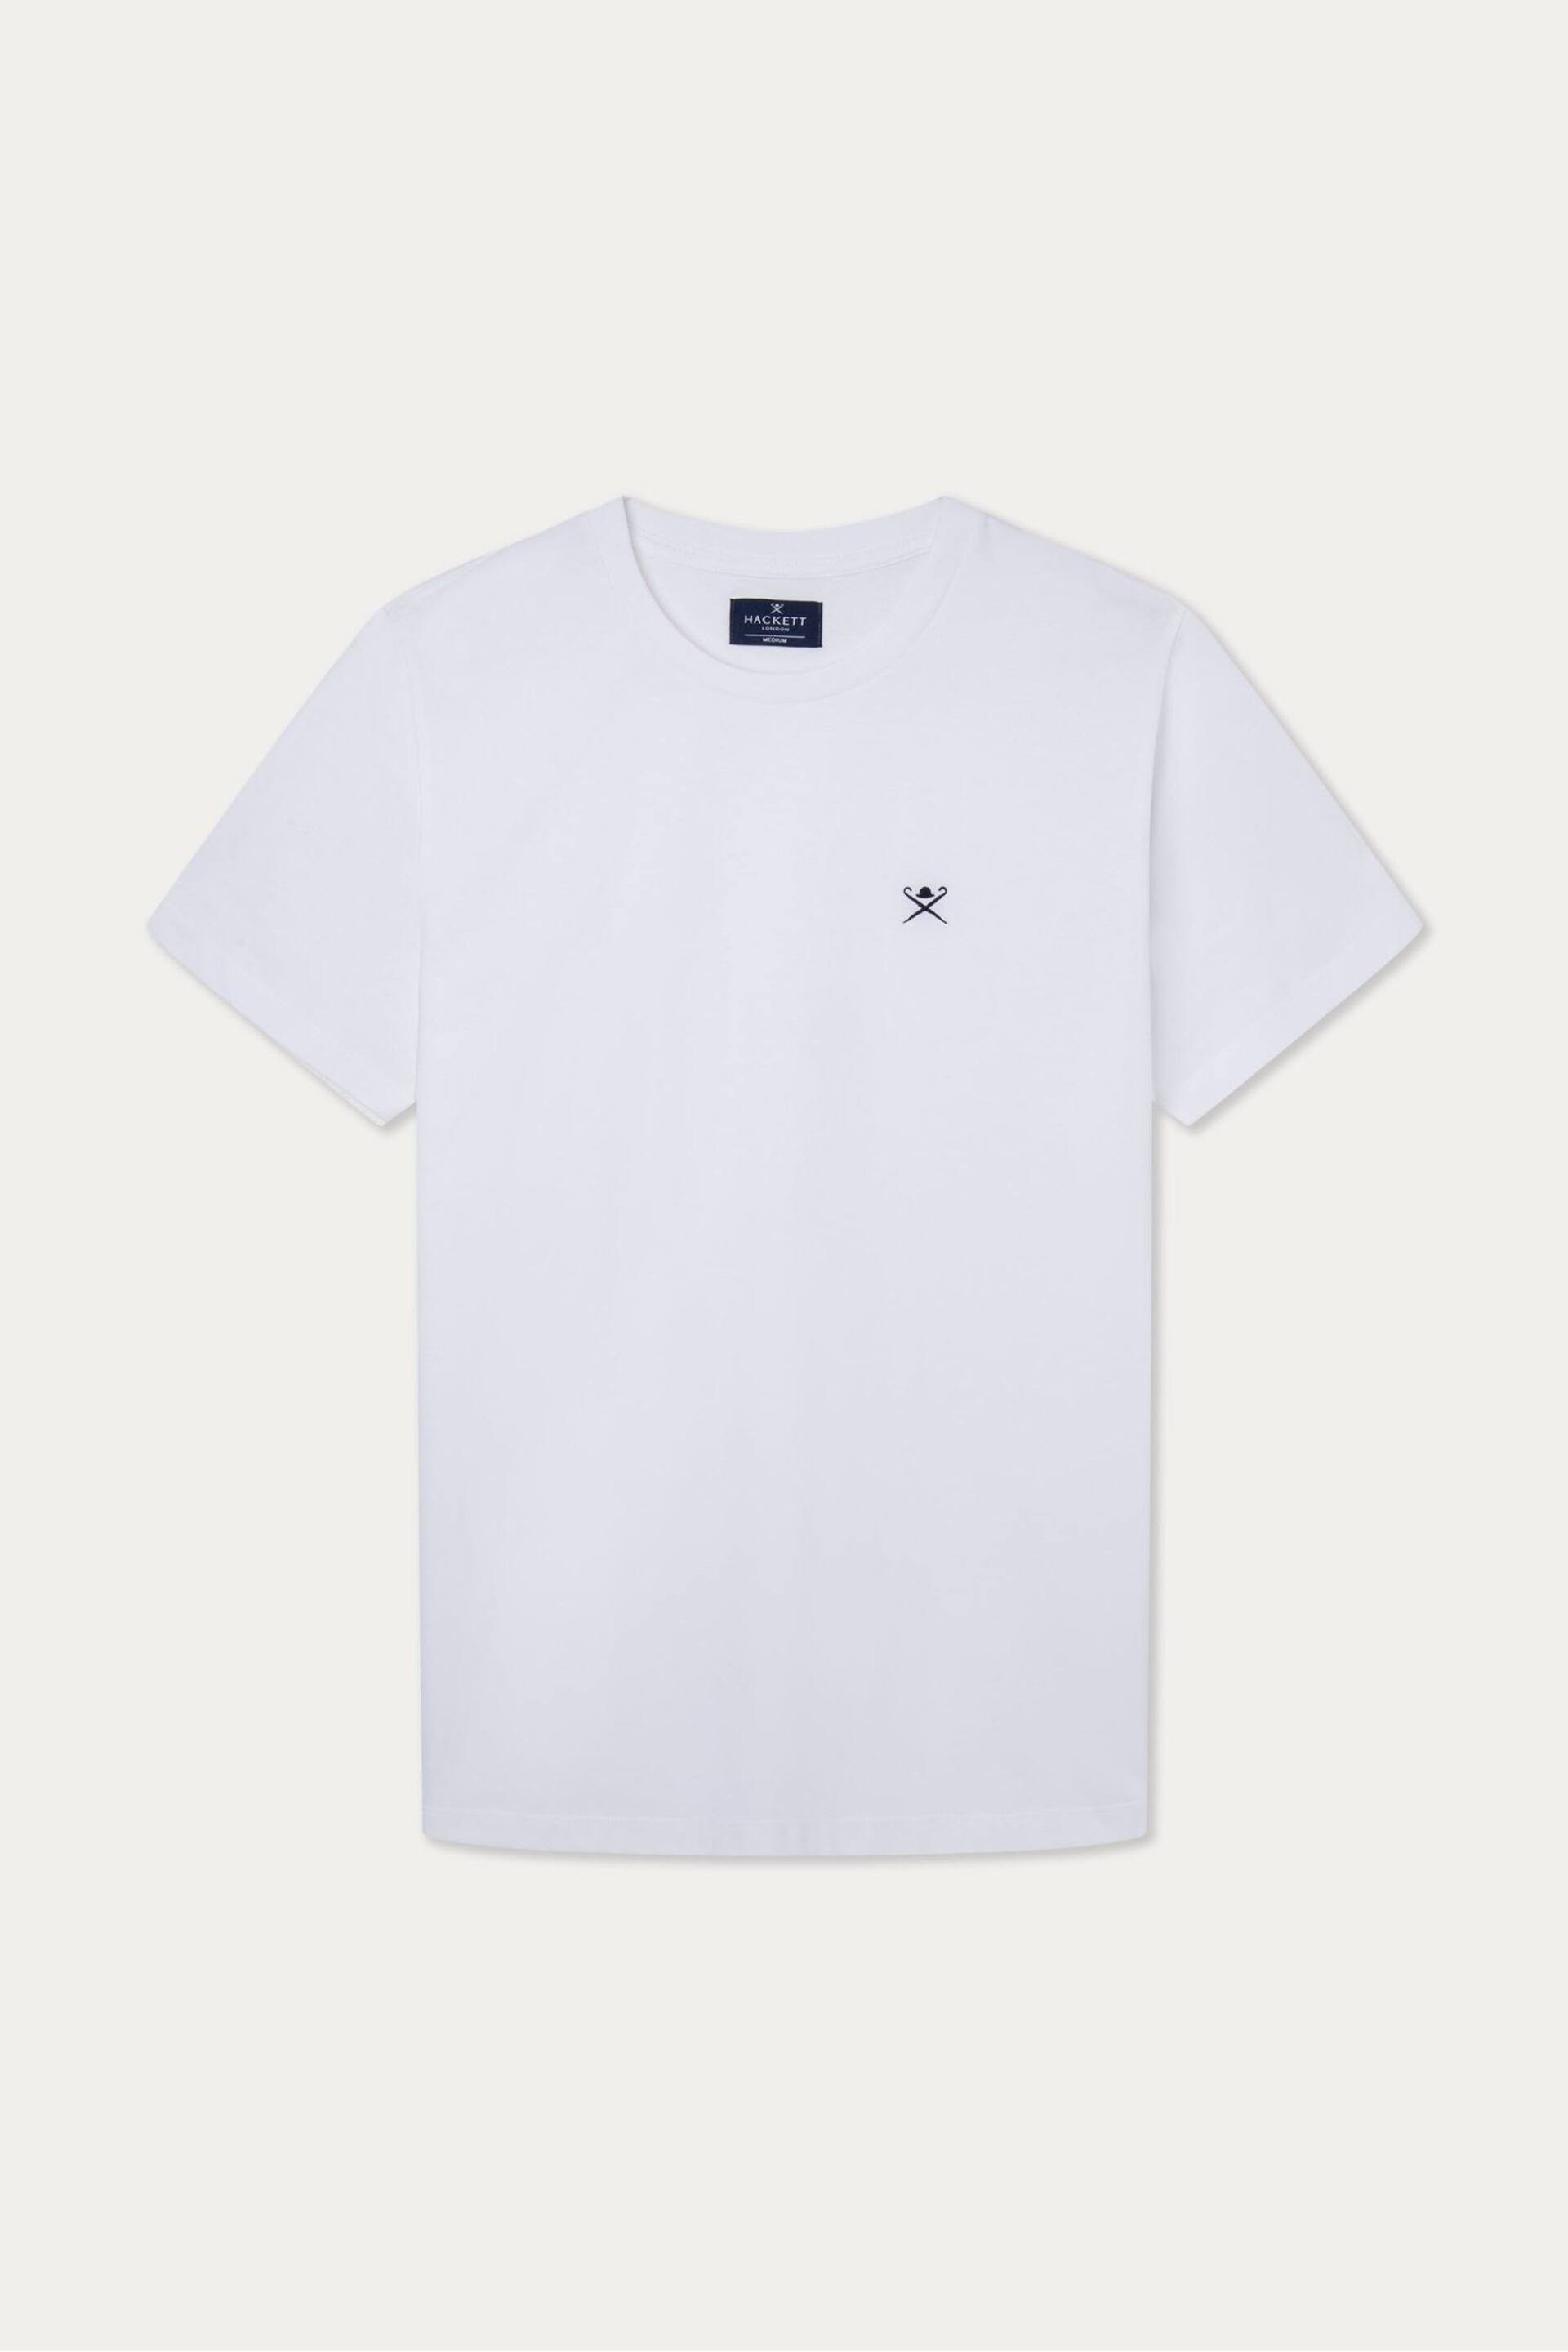 Hackett London Men White T-Shirt - Image 1 of 3